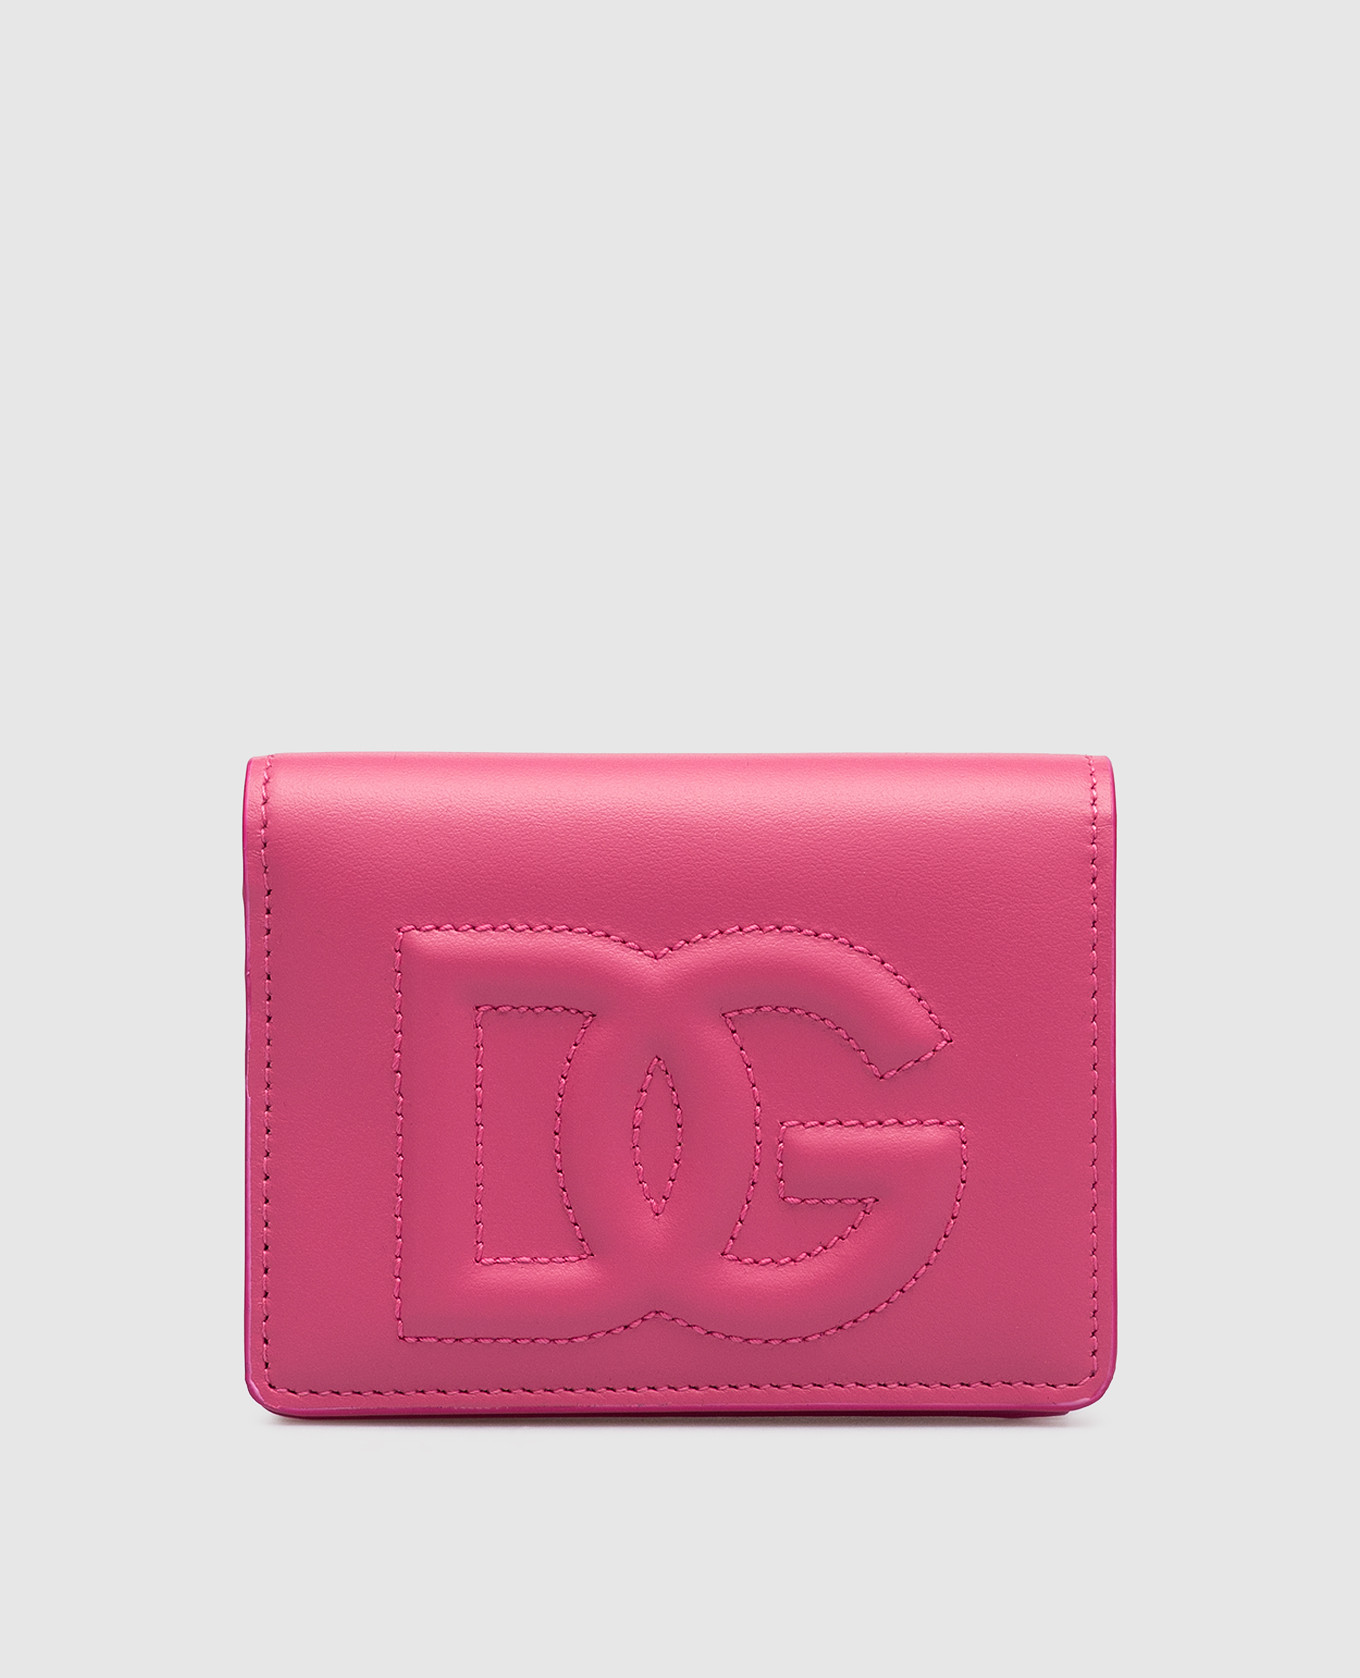 DG Logo pink purse